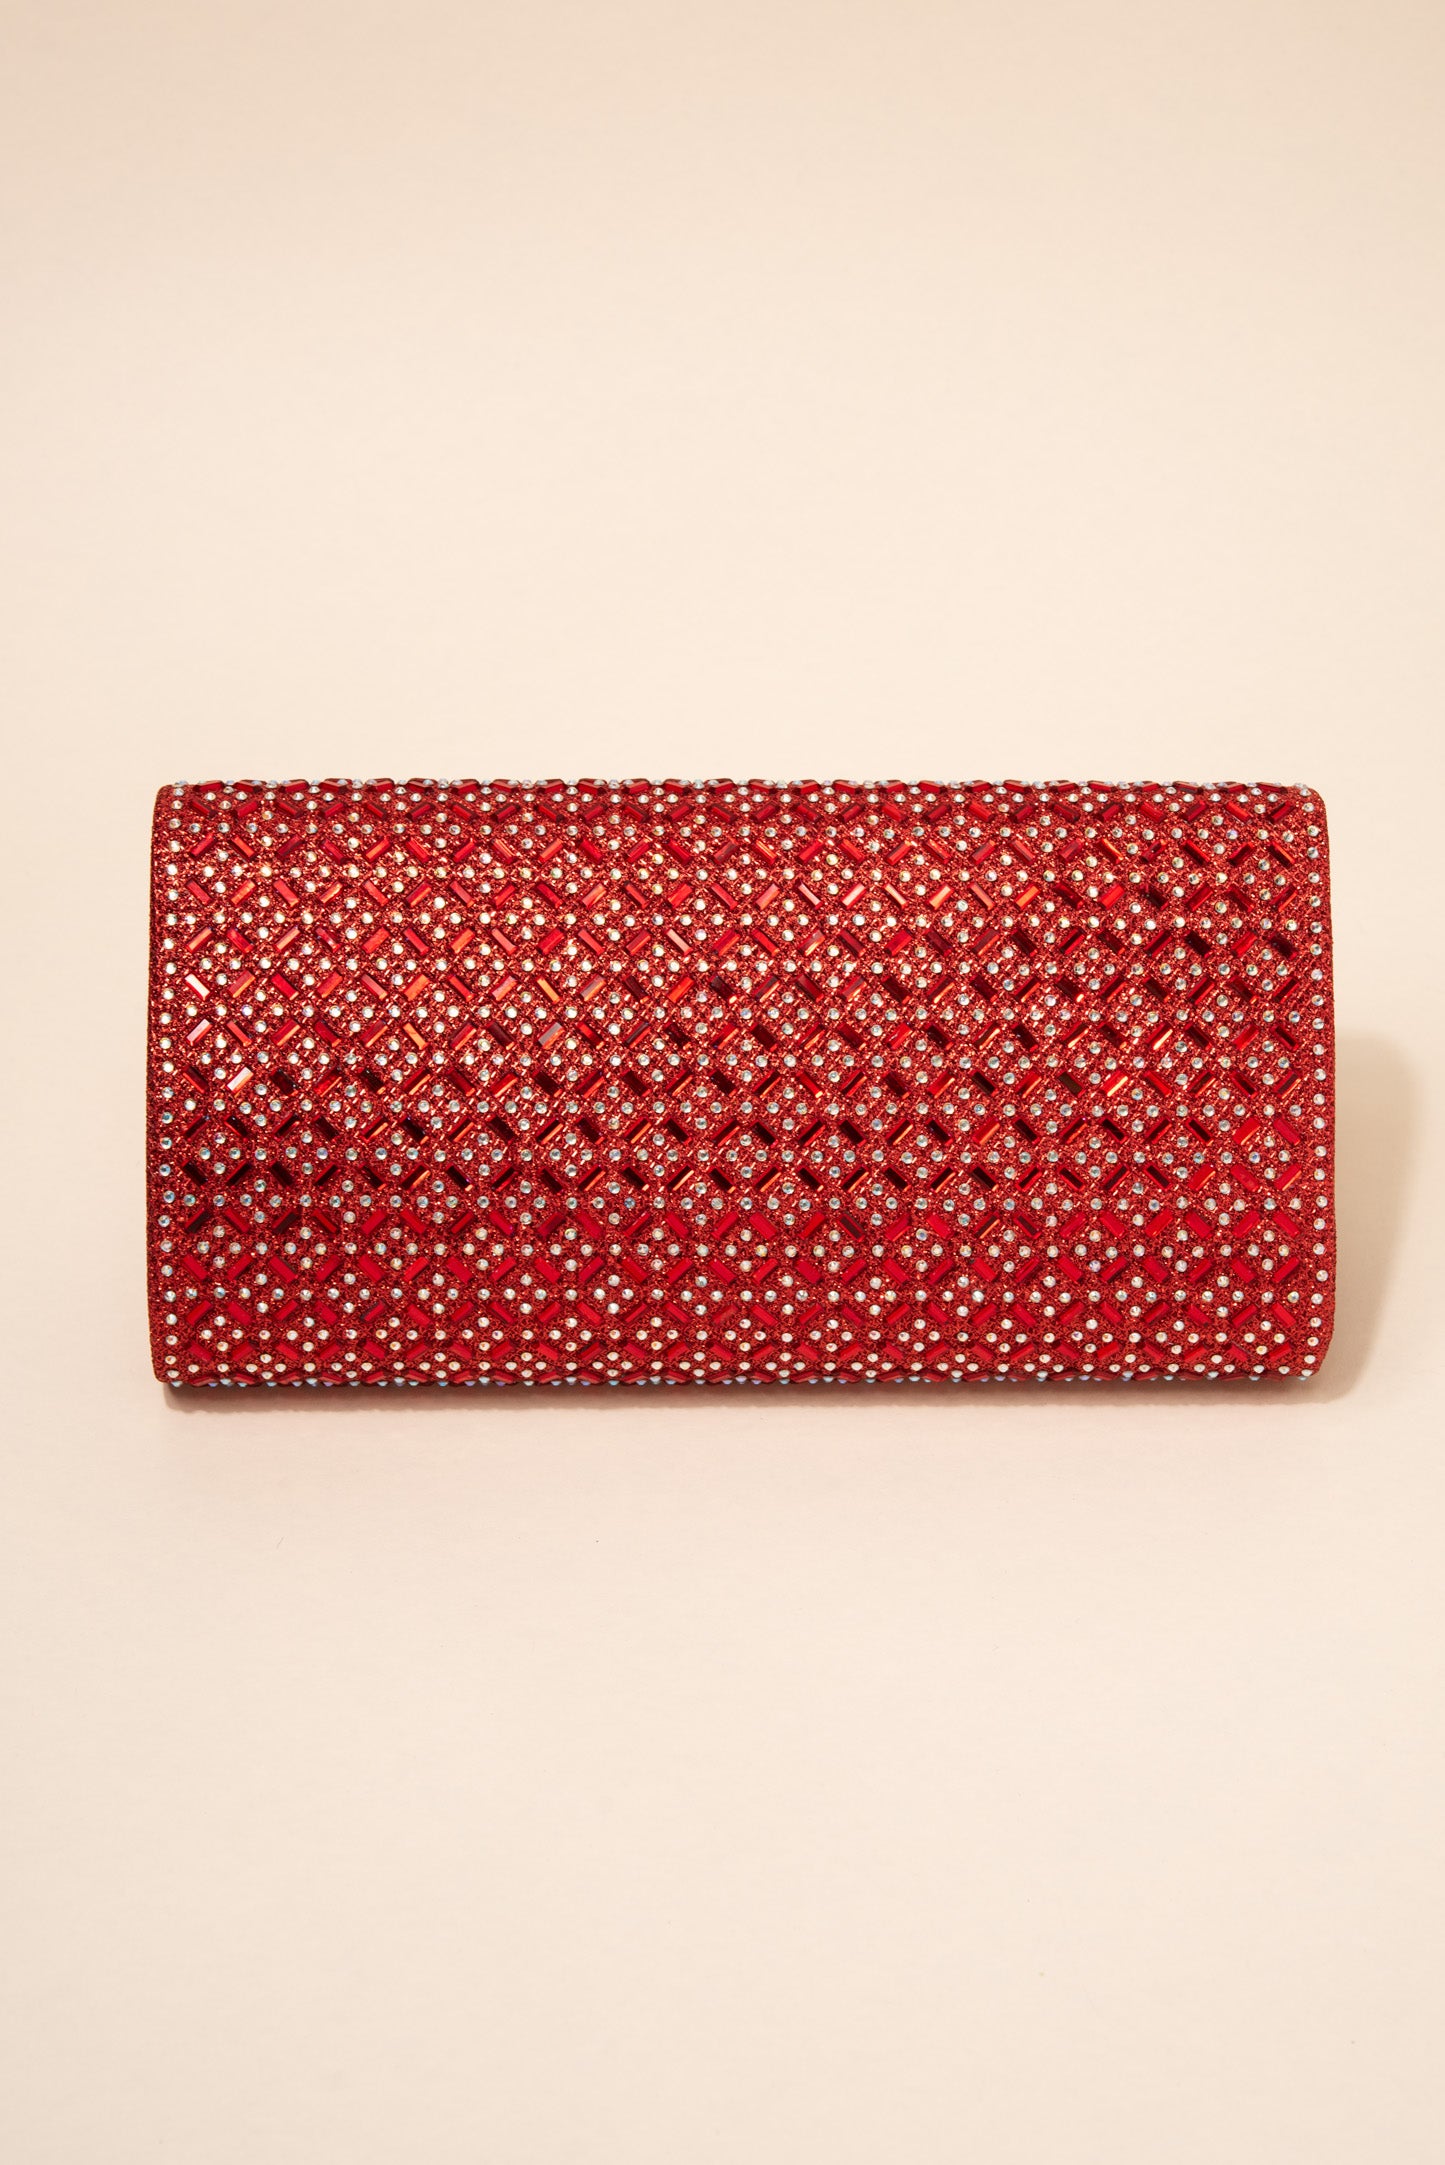 Rachel Rhinestone Crystal Embellished Evening Envelope Clutch Purse - Red